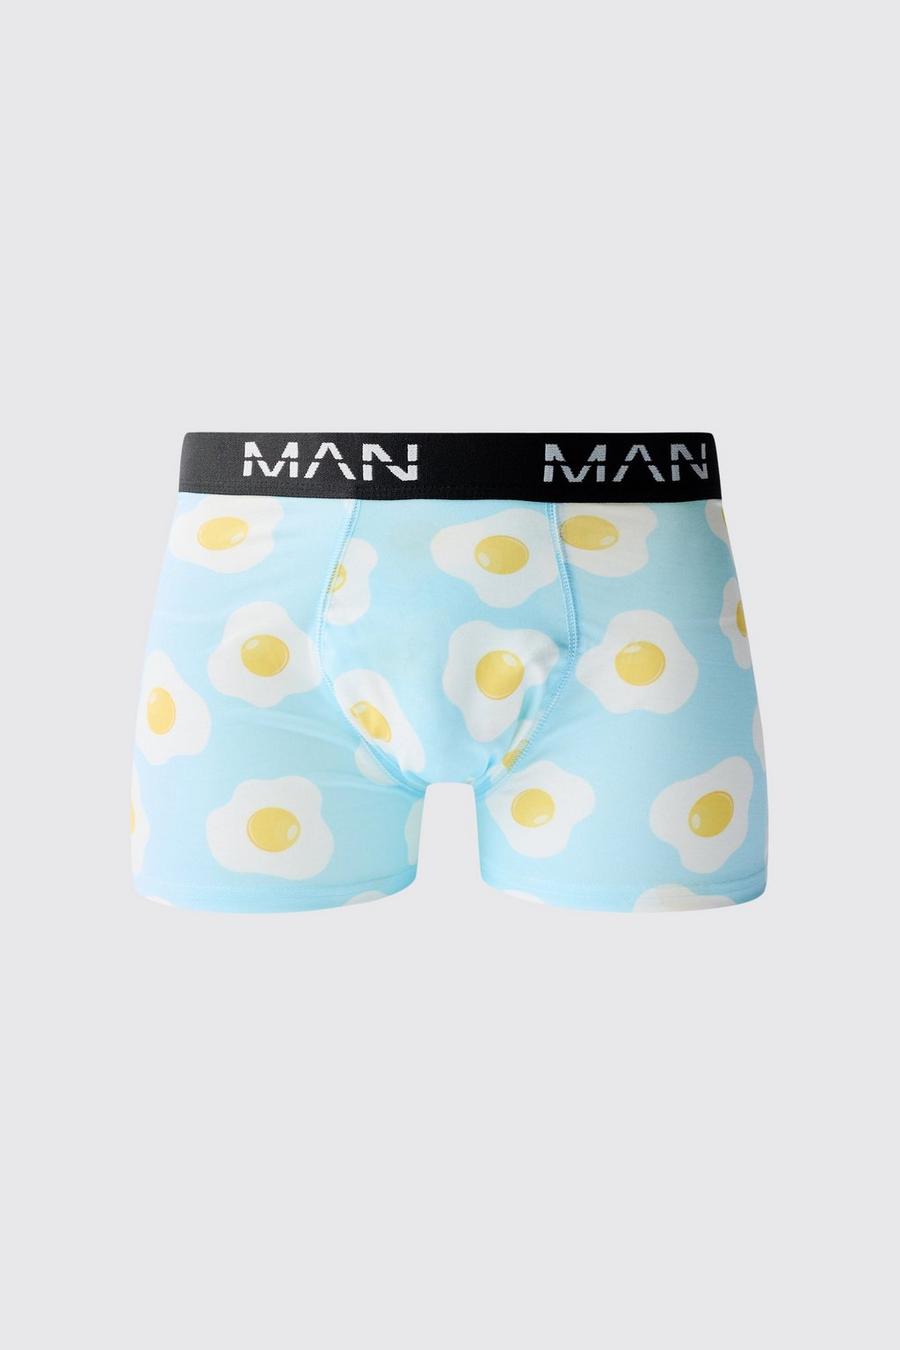 Multi Man Fried Egg Printed Boxers